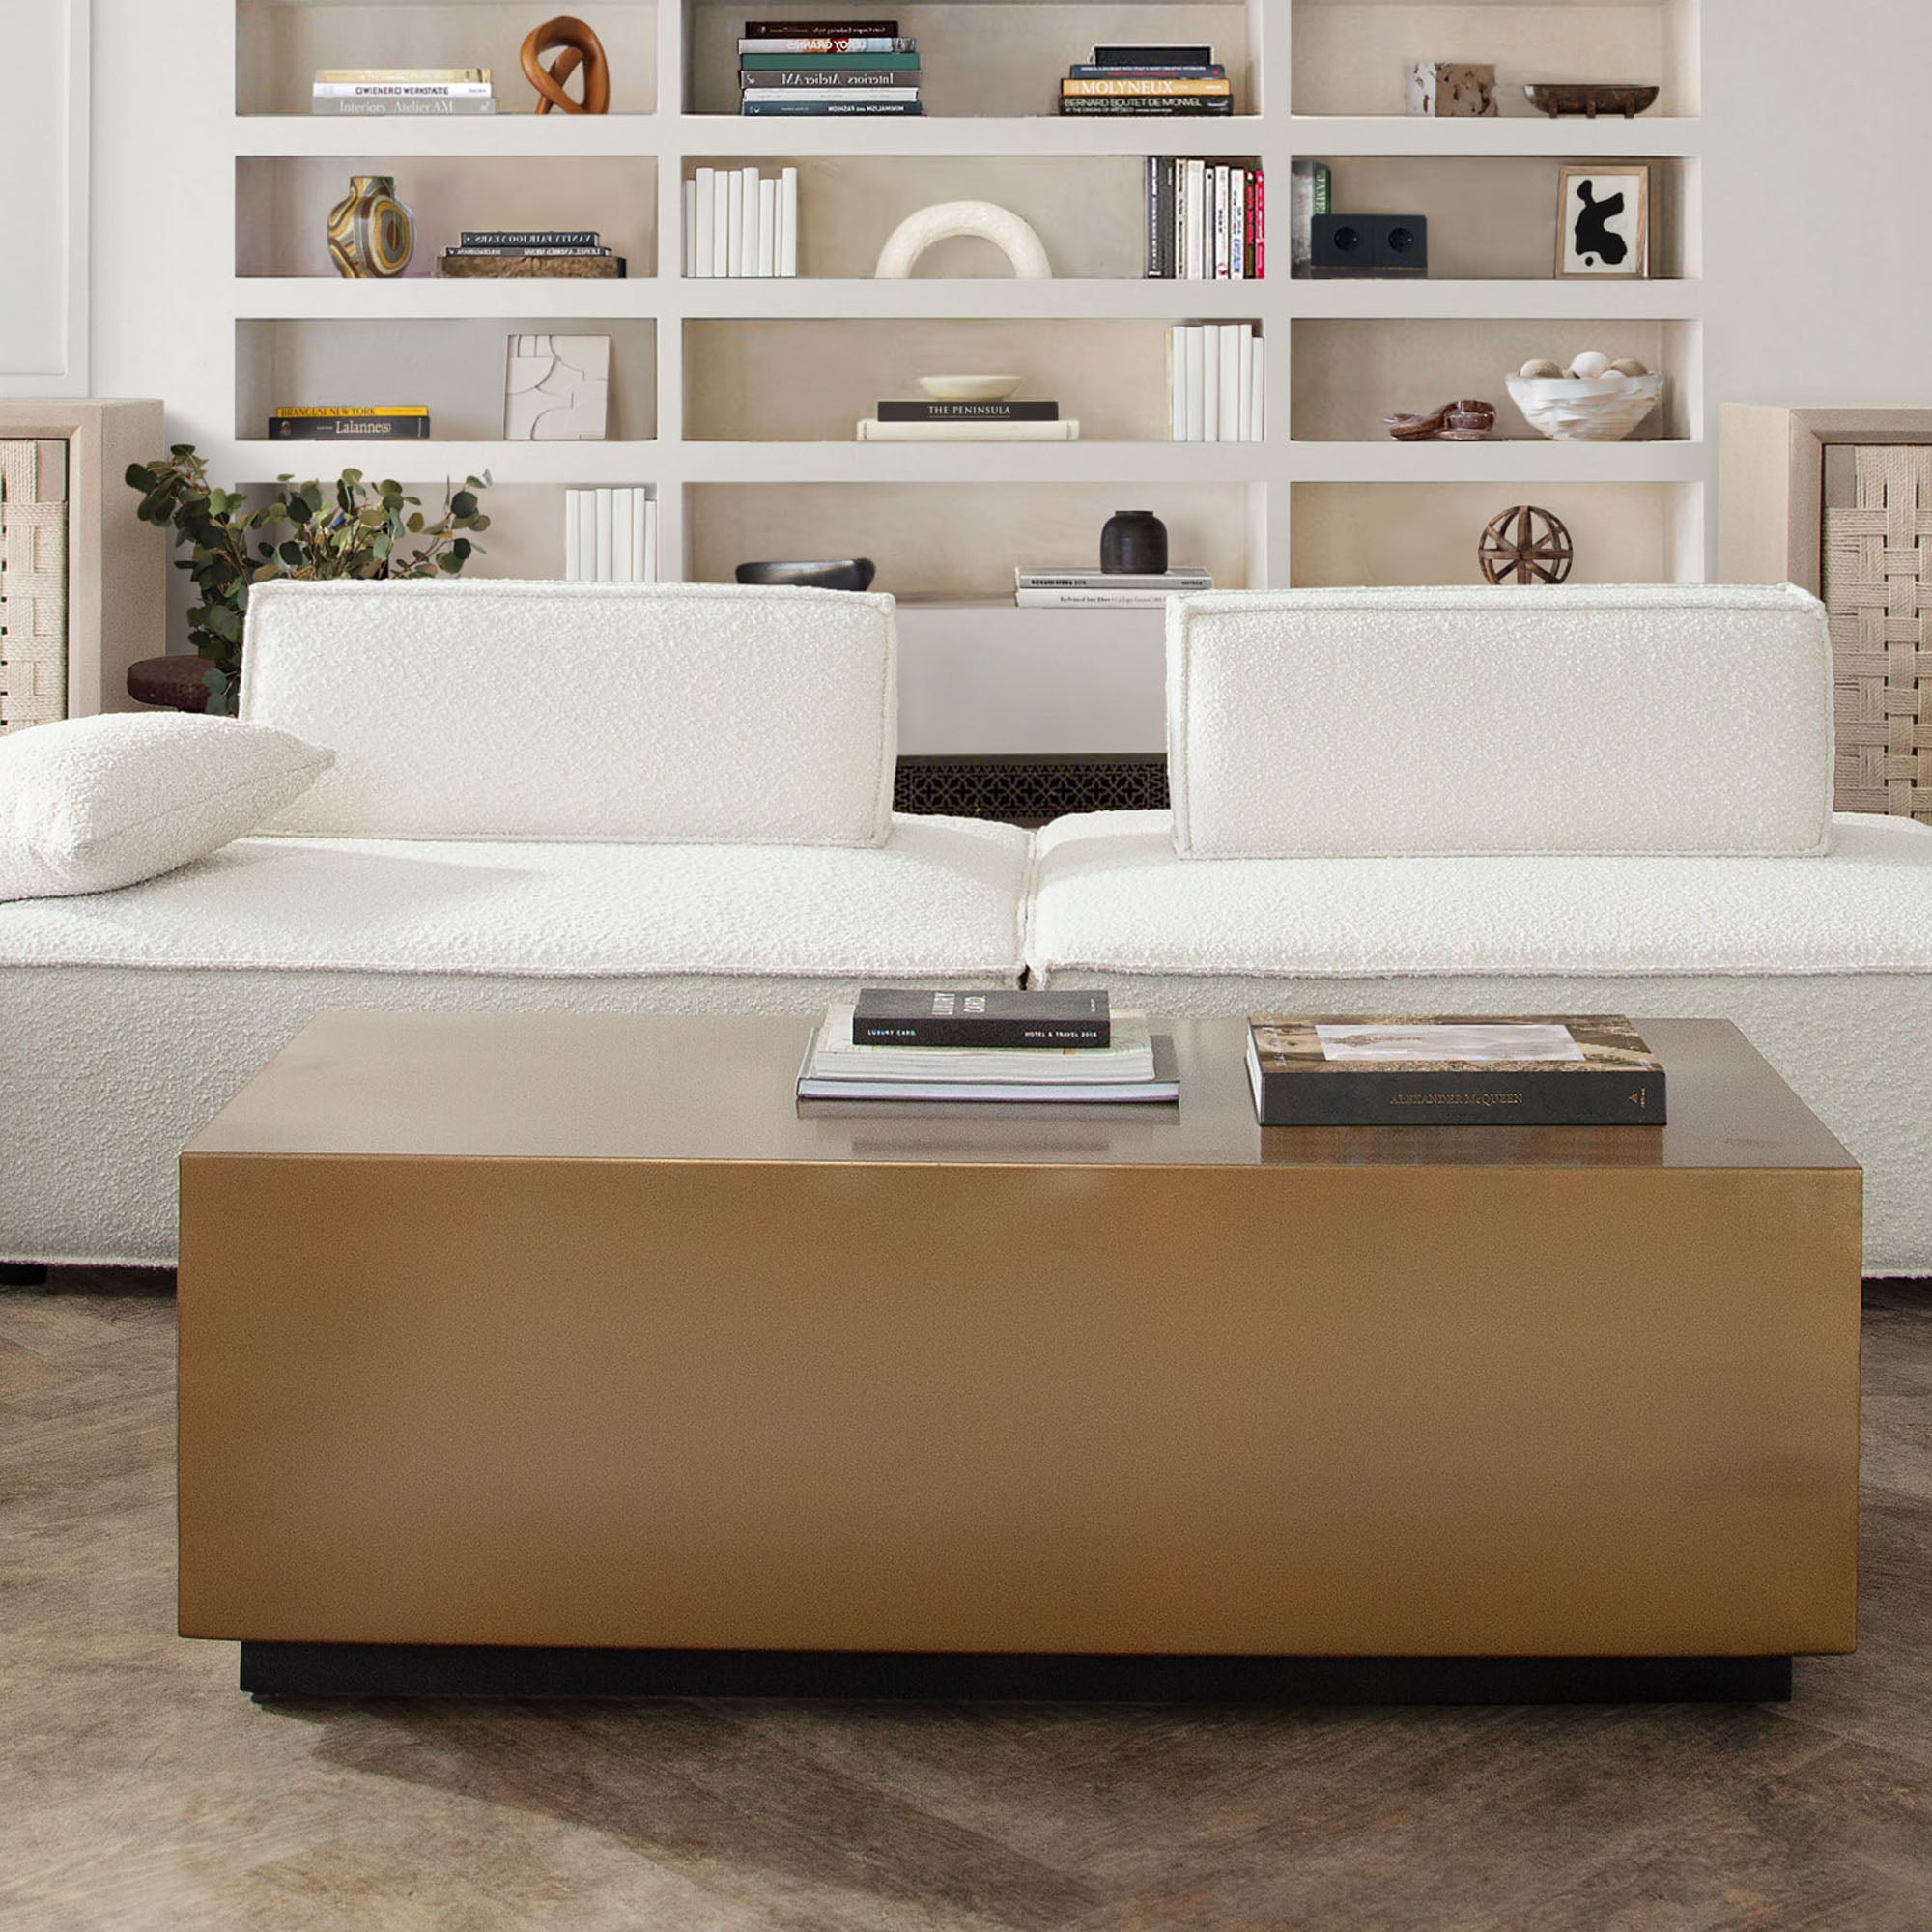 Diamond Sofa Cara 2-piece Square Modular Lounger